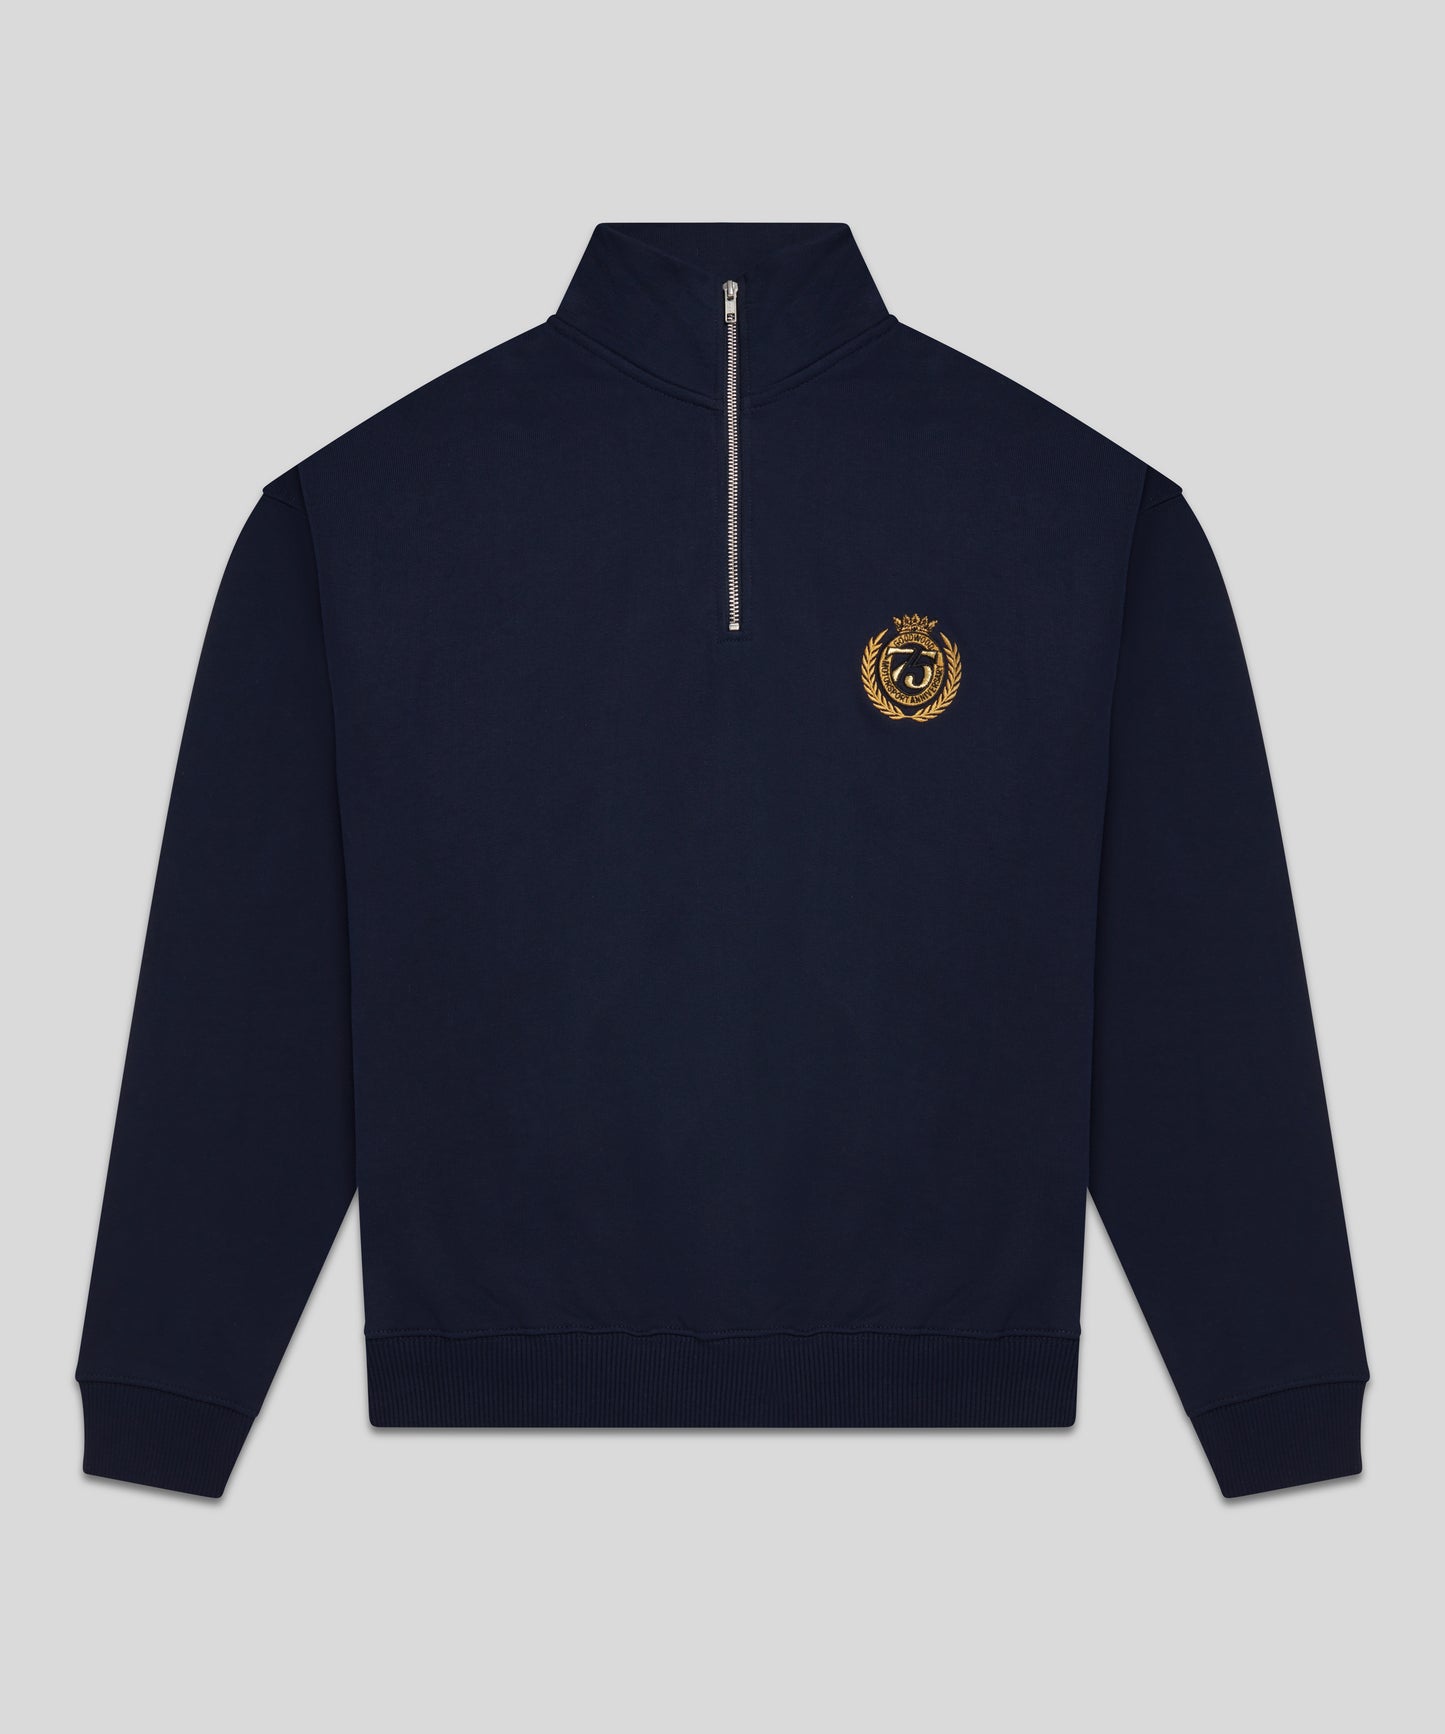 Goodwood 75 Year Anniversary Embroidered 1/4 Zip Sweatshirt